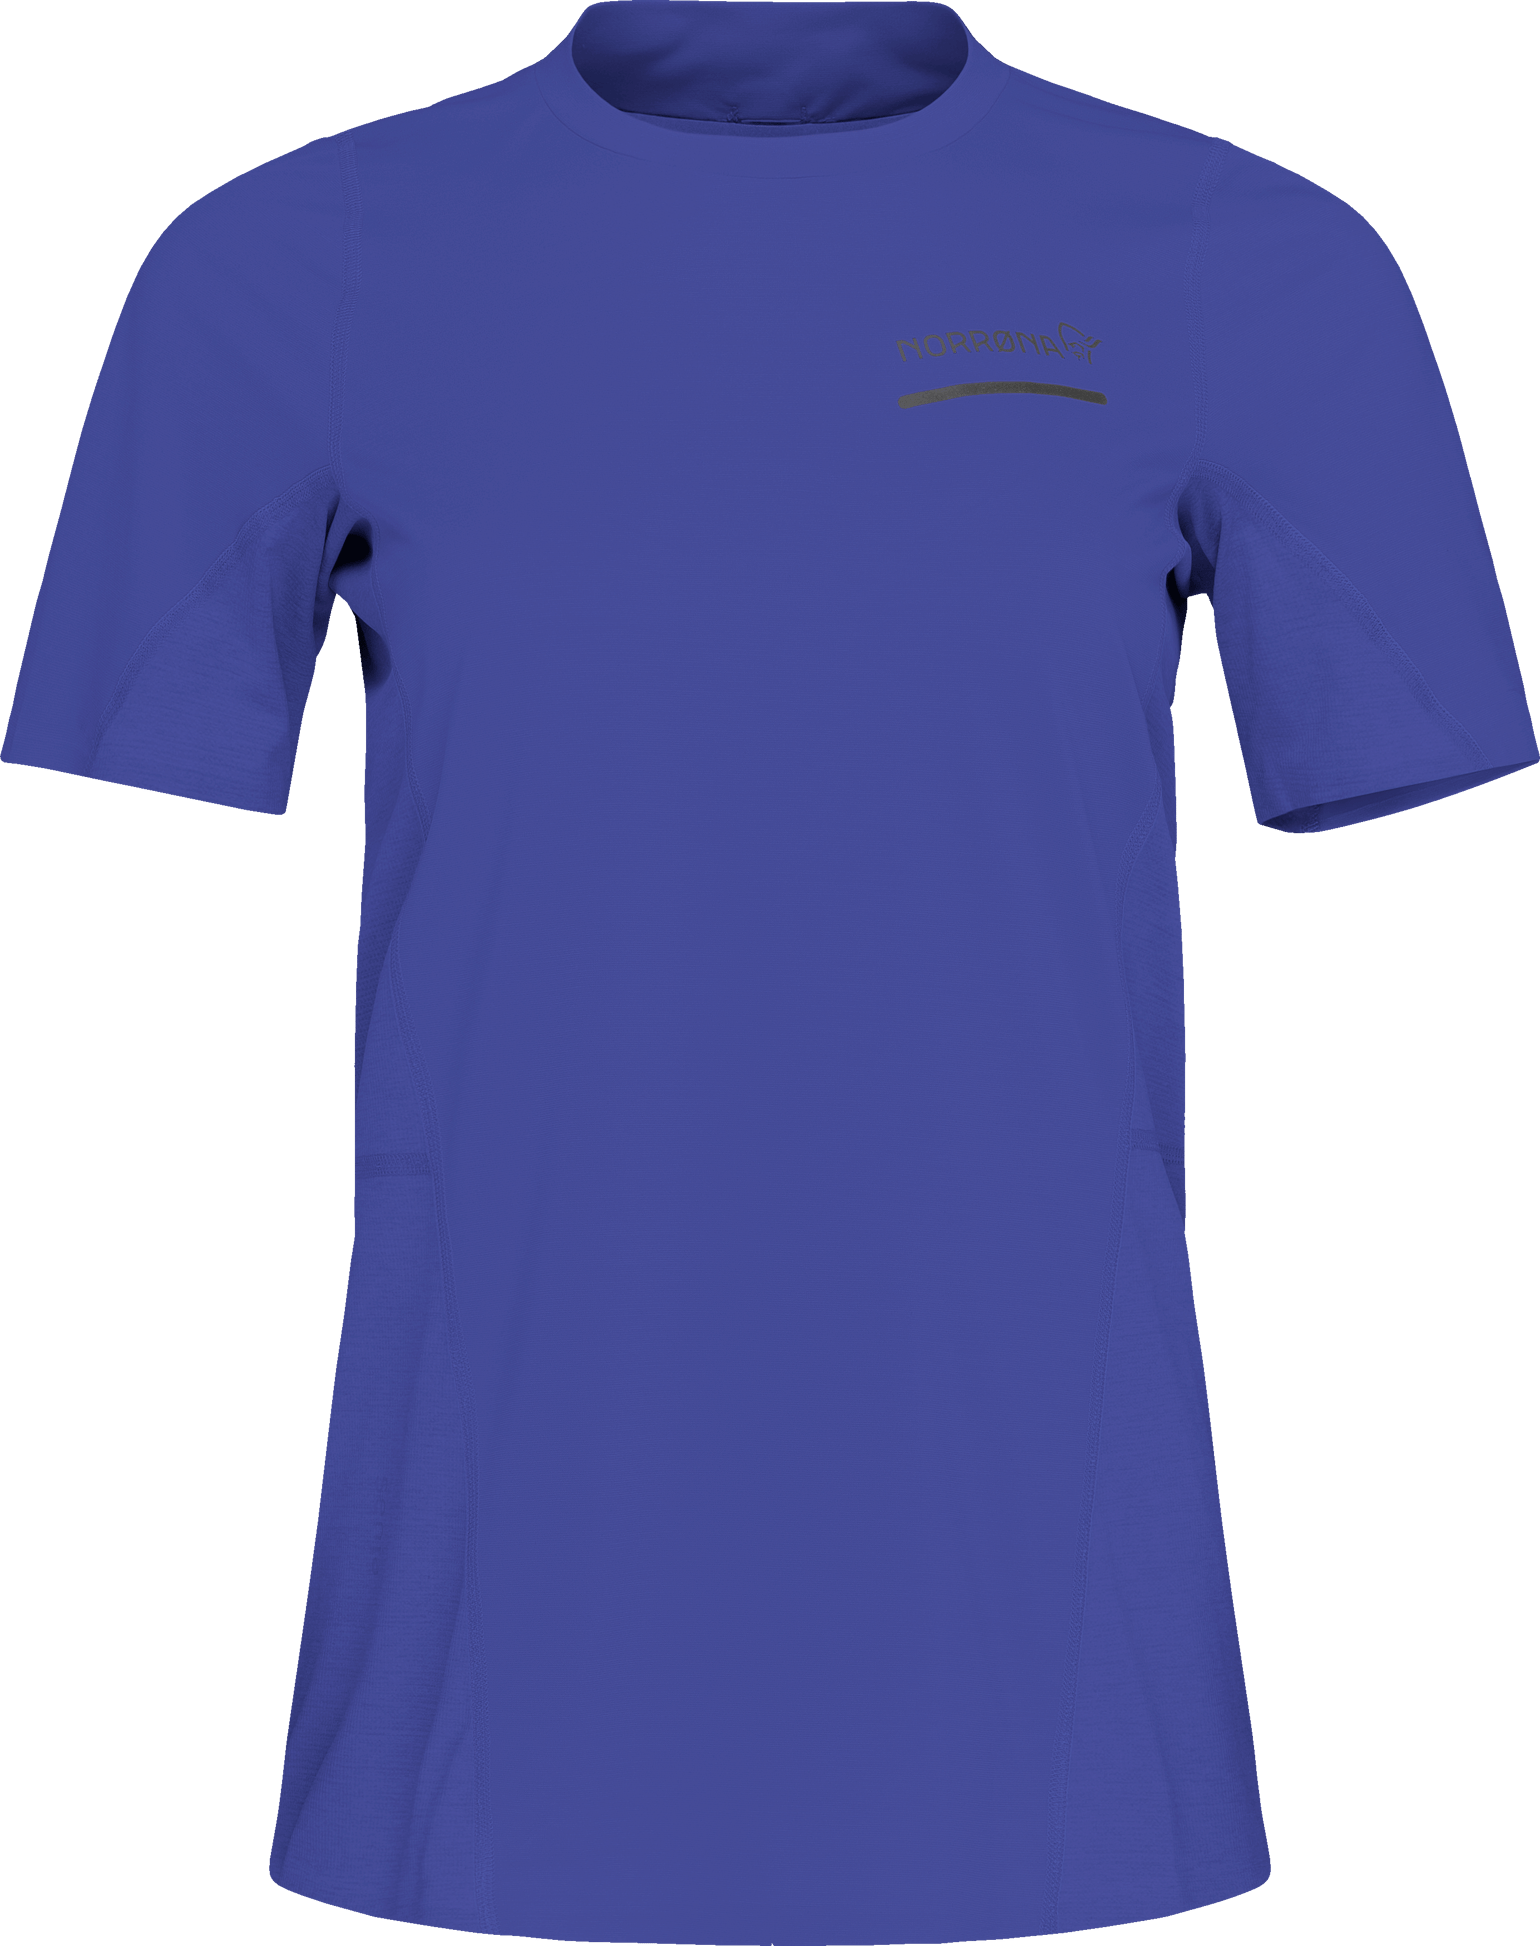 Norrøna Women's Senja Equaliser Lightweight T-Shirt Royal Blue